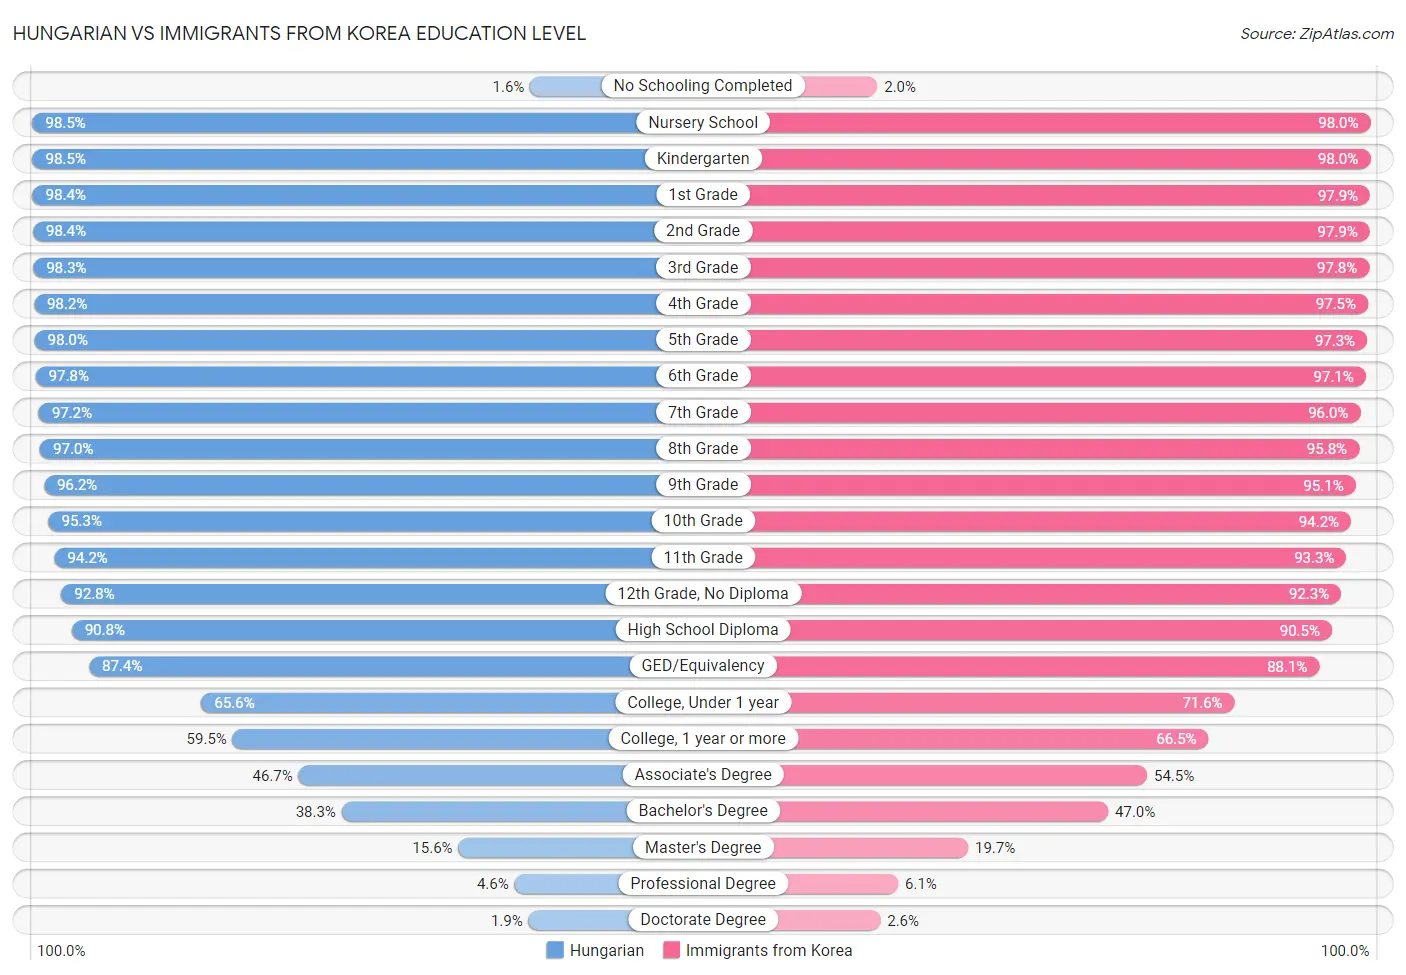 Hungarian vs Immigrants from Korea Education Level